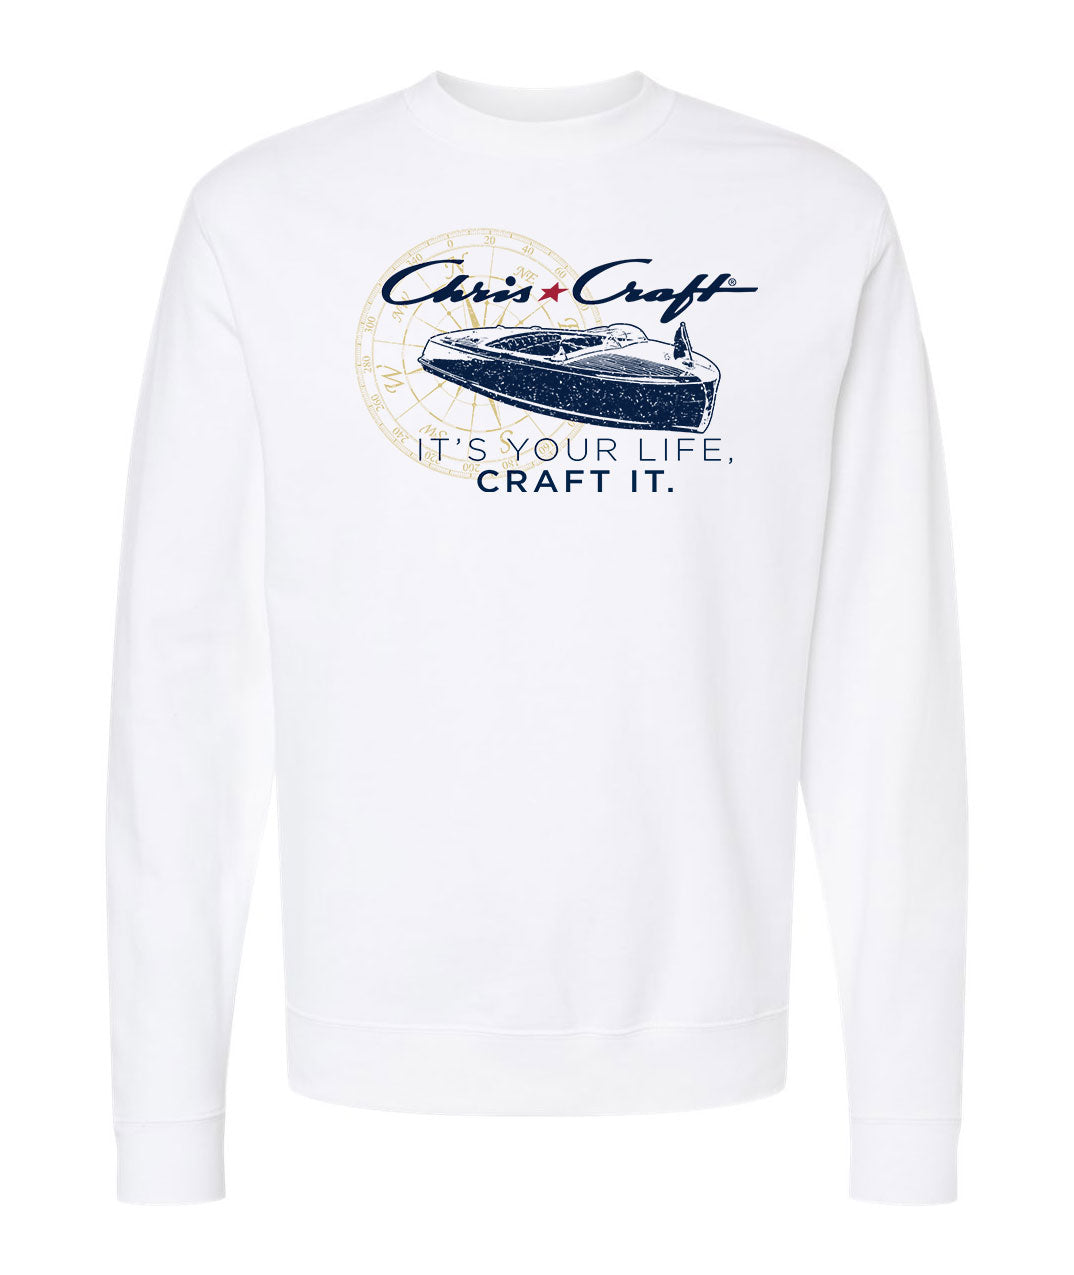 Chris-Craft Craft It Men's Crewneck Sweatshirt